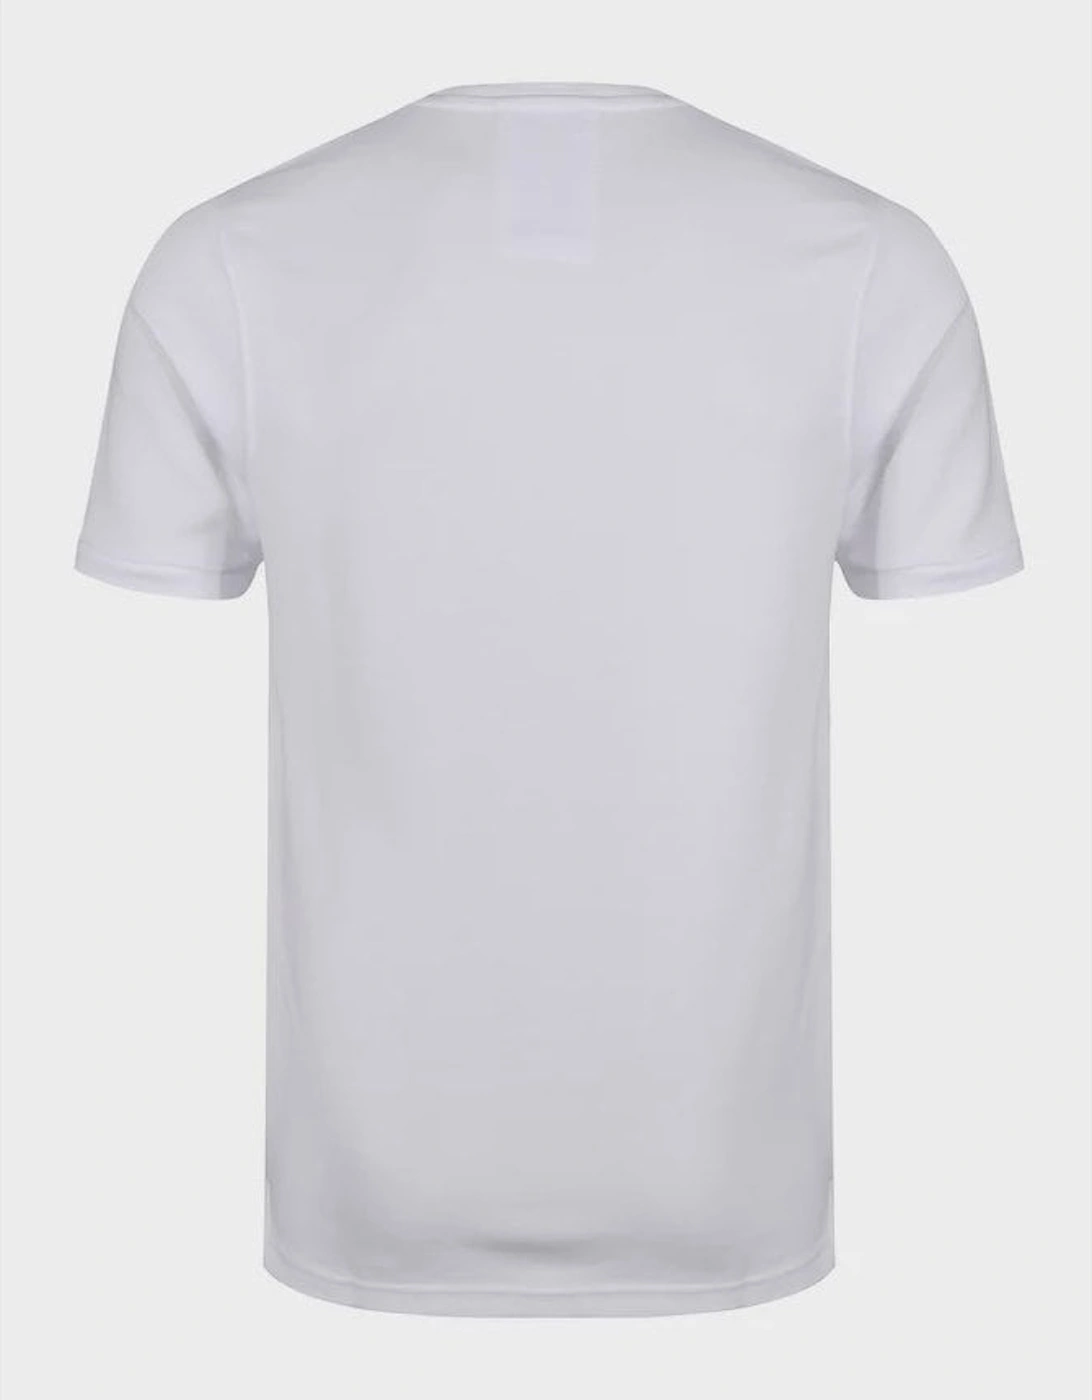 LUKE1977 Trafftastic T-Shirt - White